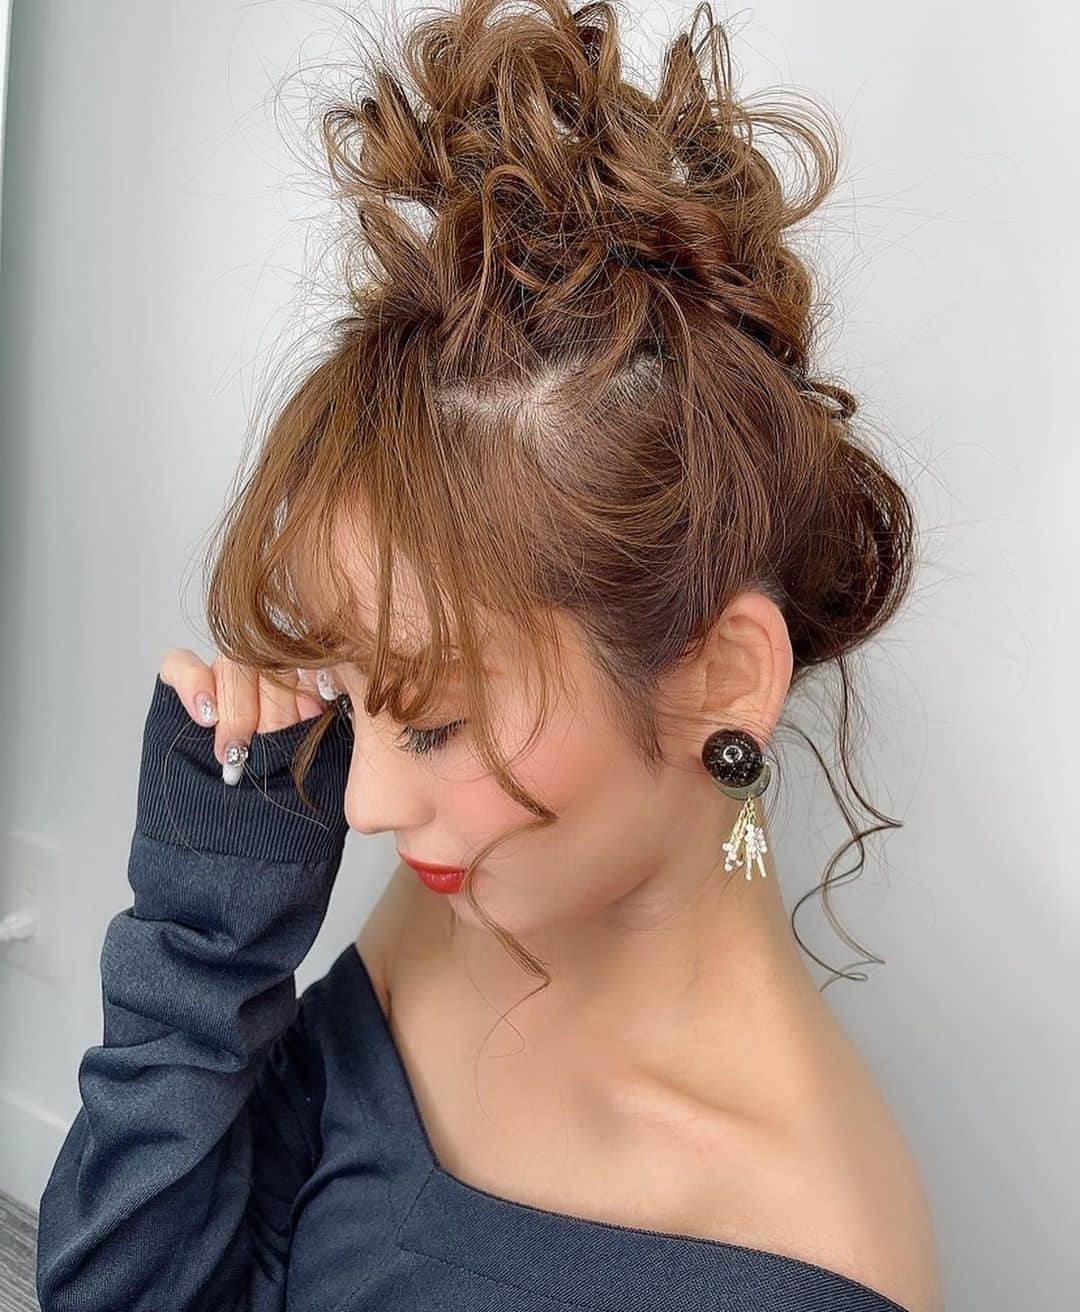 CHINATSUのインスタグラム：「𝐊𝐮𝐫𝐢𝐦𝐨𝐭𝐨'𝐬 𝐡𝐚𝐢𝐫 𝐚𝐫𝐫𝐚𝐧𝐠𝐞𝐦𝐞𝐧𝐭　　𝐂𝐮𝐭𝐞 𝐡𝐚𝐢𝐫𝐬𝐭𝐲𝐥𝐞, 𝐠𝐫𝐞𝐚𝐭 𝐬𝐡𝐨𝐨𝐭𝐢𝐧𝐠　　𝐇𝐚𝐯𝐞 𝐚 𝐠𝐨𝐨𝐝 𝐭𝐢𝐦𝐞. 𝐓𝐡𝐚𝐧𝐤 𝐲𝐨𝐮  HARE @hiroshikurimoto   accessory @tacchan102  @bringing_heaven_to_earth   #hairstyle  #hairfashion  #arrangement  #hairarrange  #cute  #handmadeaccessory  #earrings  #osaka」